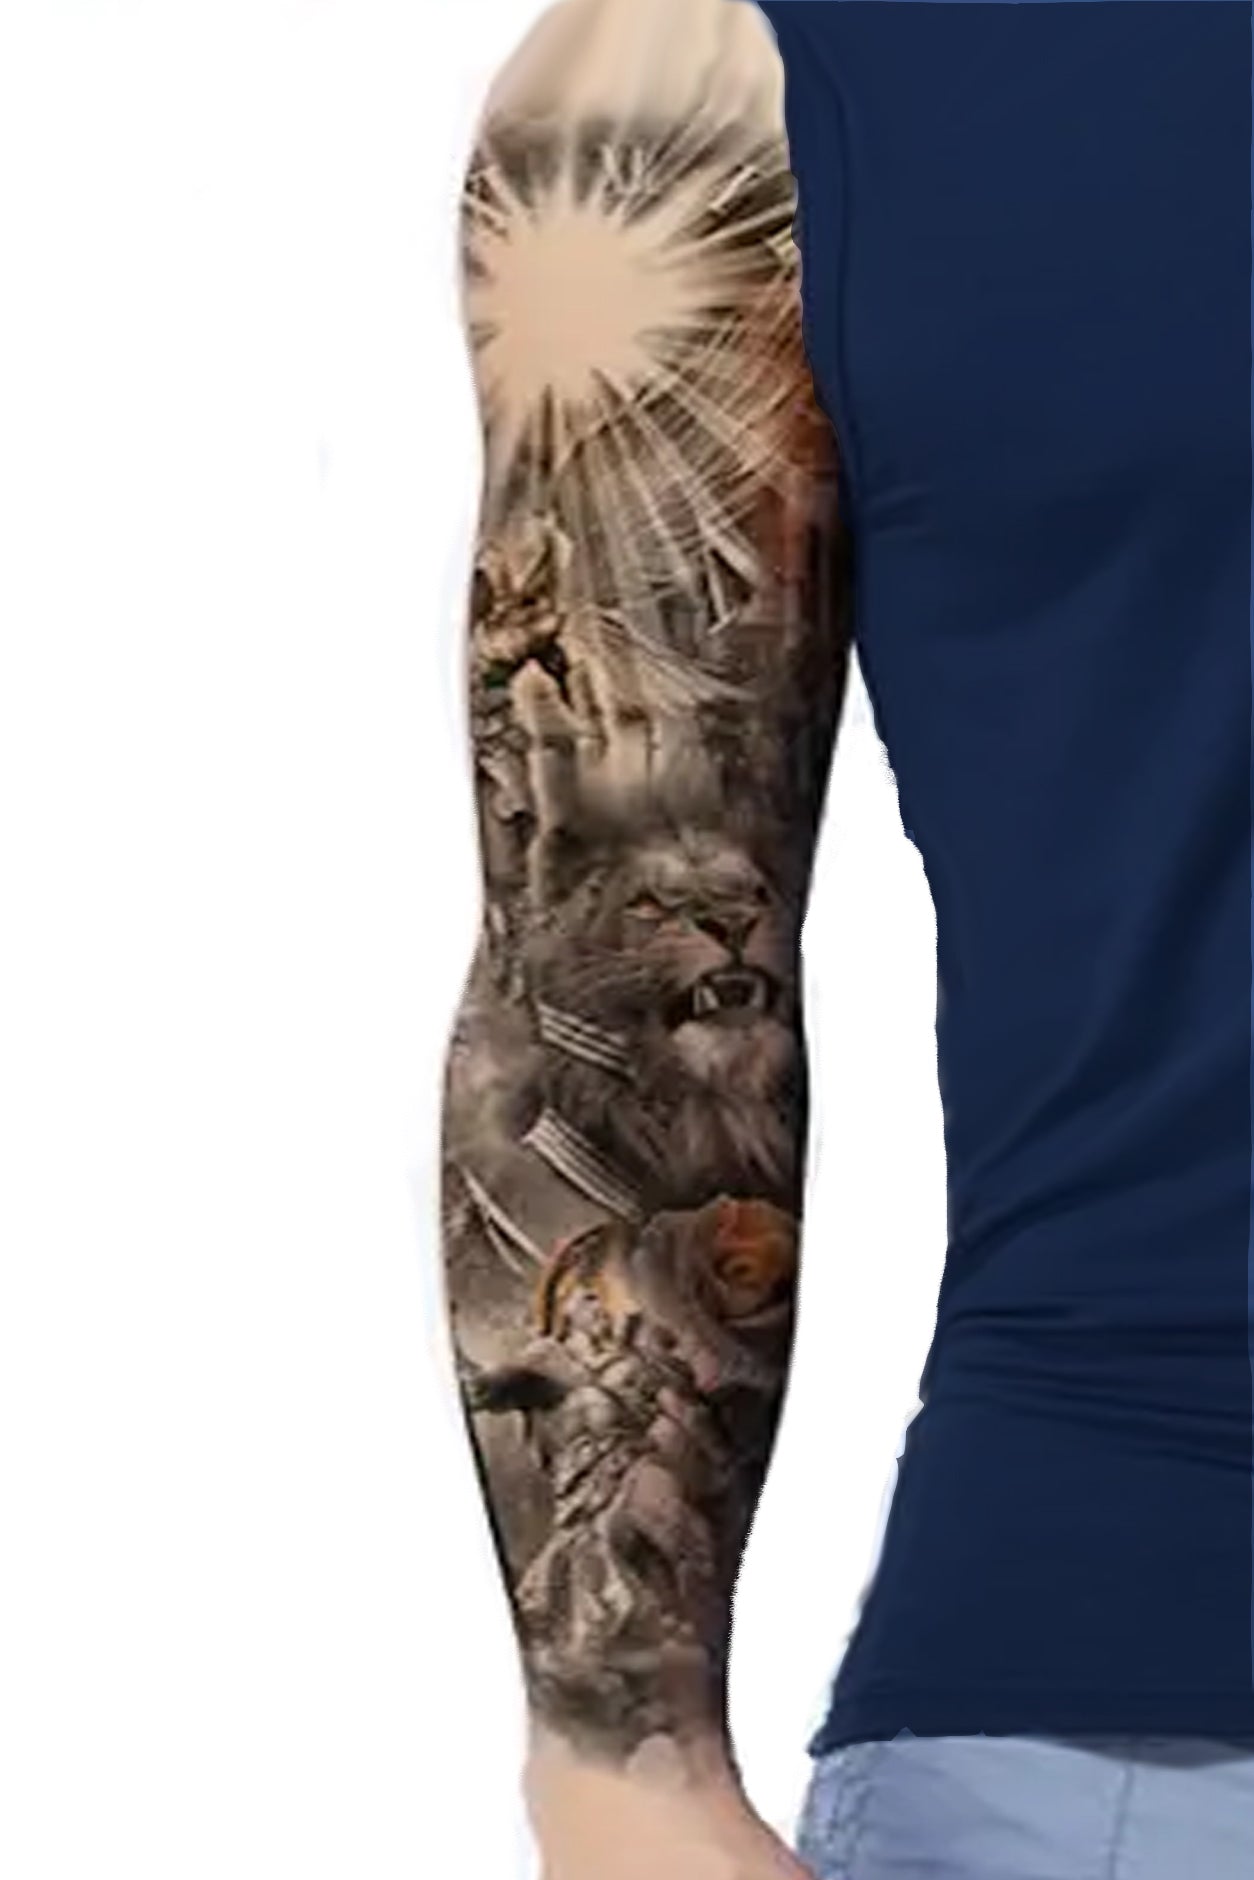 Tattoo uploaded by Eduardo Basi • Spartan warrior • Tattoodo